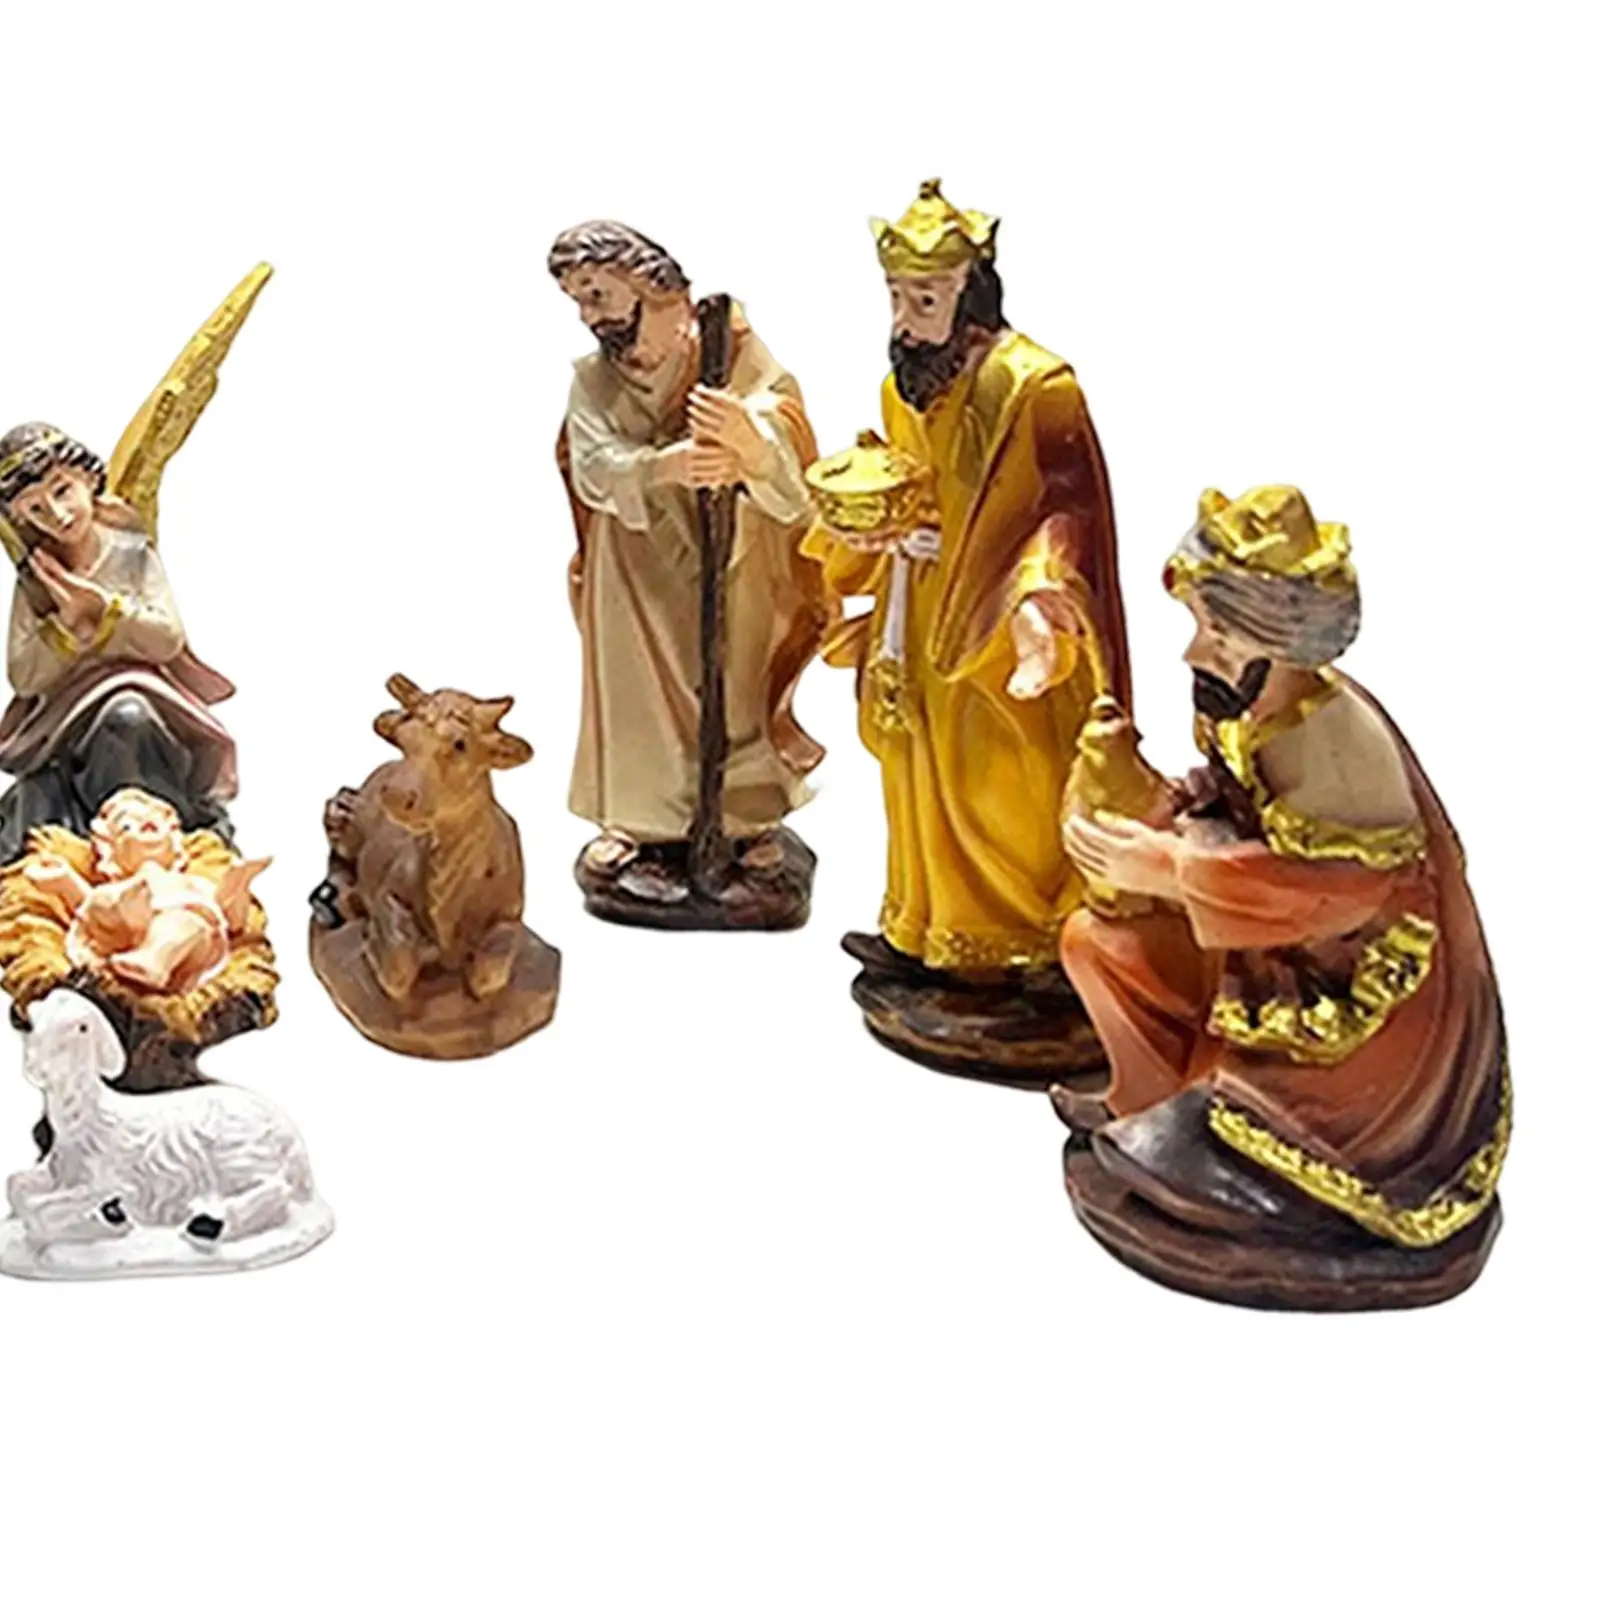 

Nativity Figurine Religious Worship Holy Family Sacred Christmas Birth of Jesus Statue Set for Office Shelf Desk Church